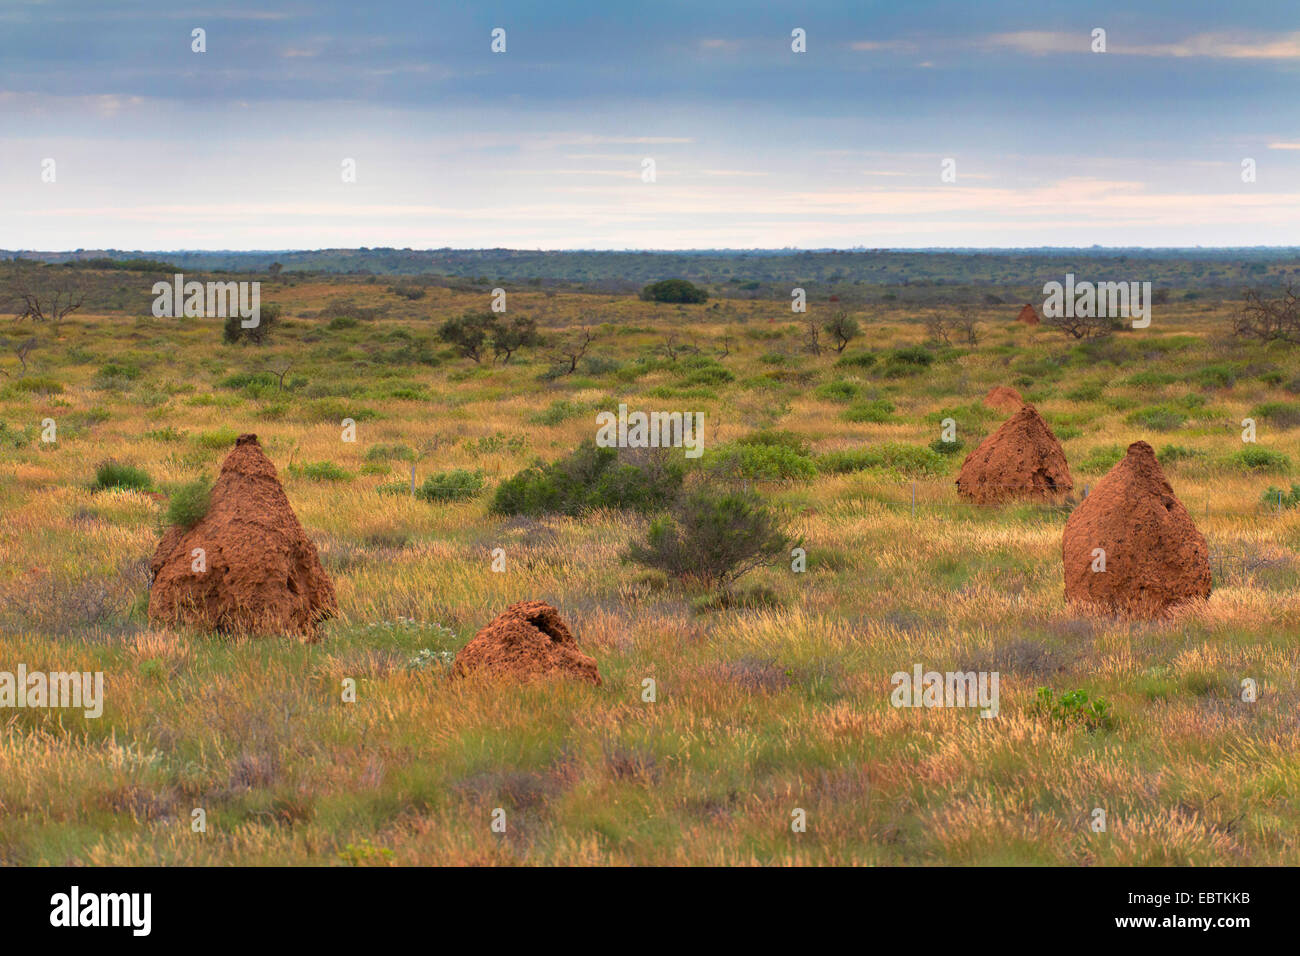 Termiten (Isoptera), Termiten Nester in der Steppe, Australia, Western Australia, Cardabia Stockfoto